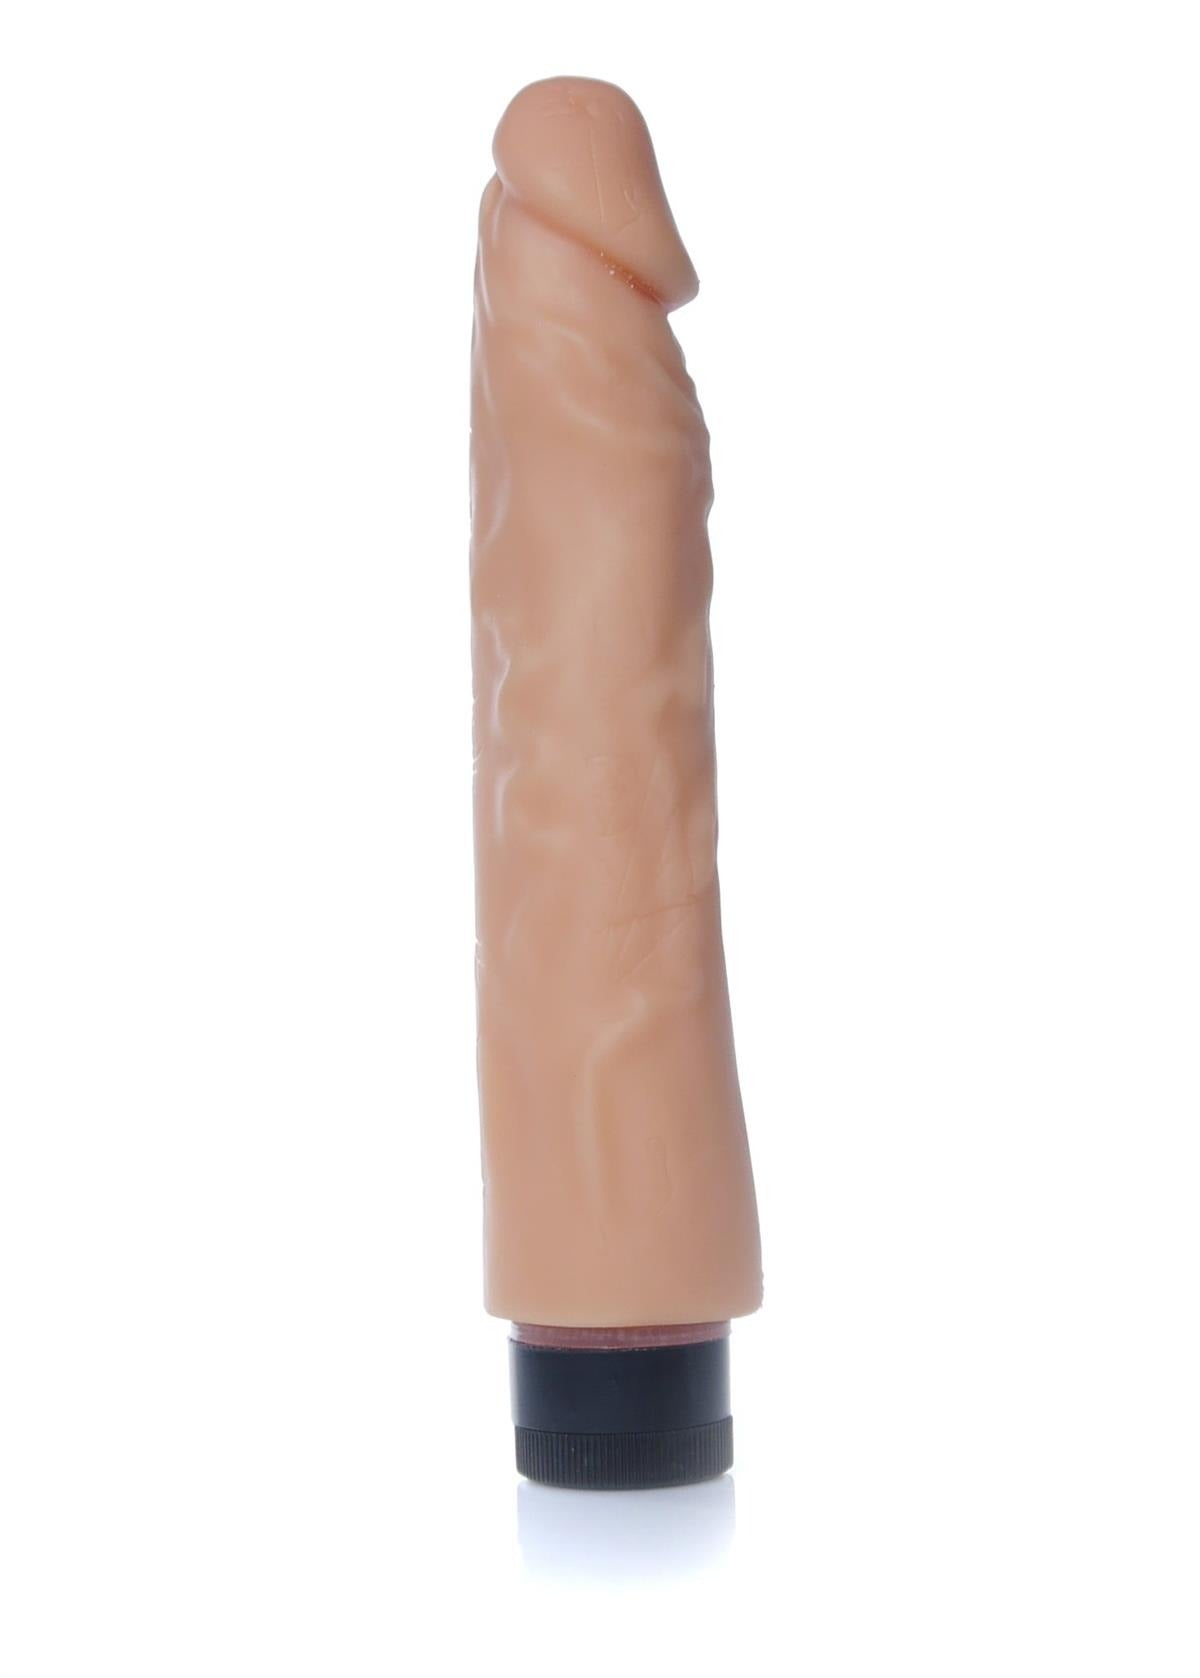 Bossoftoys - 67-00067 - Real Skin - Realistic vibrator - Flesh - 23 m- Dia 4 cm - Multispeed